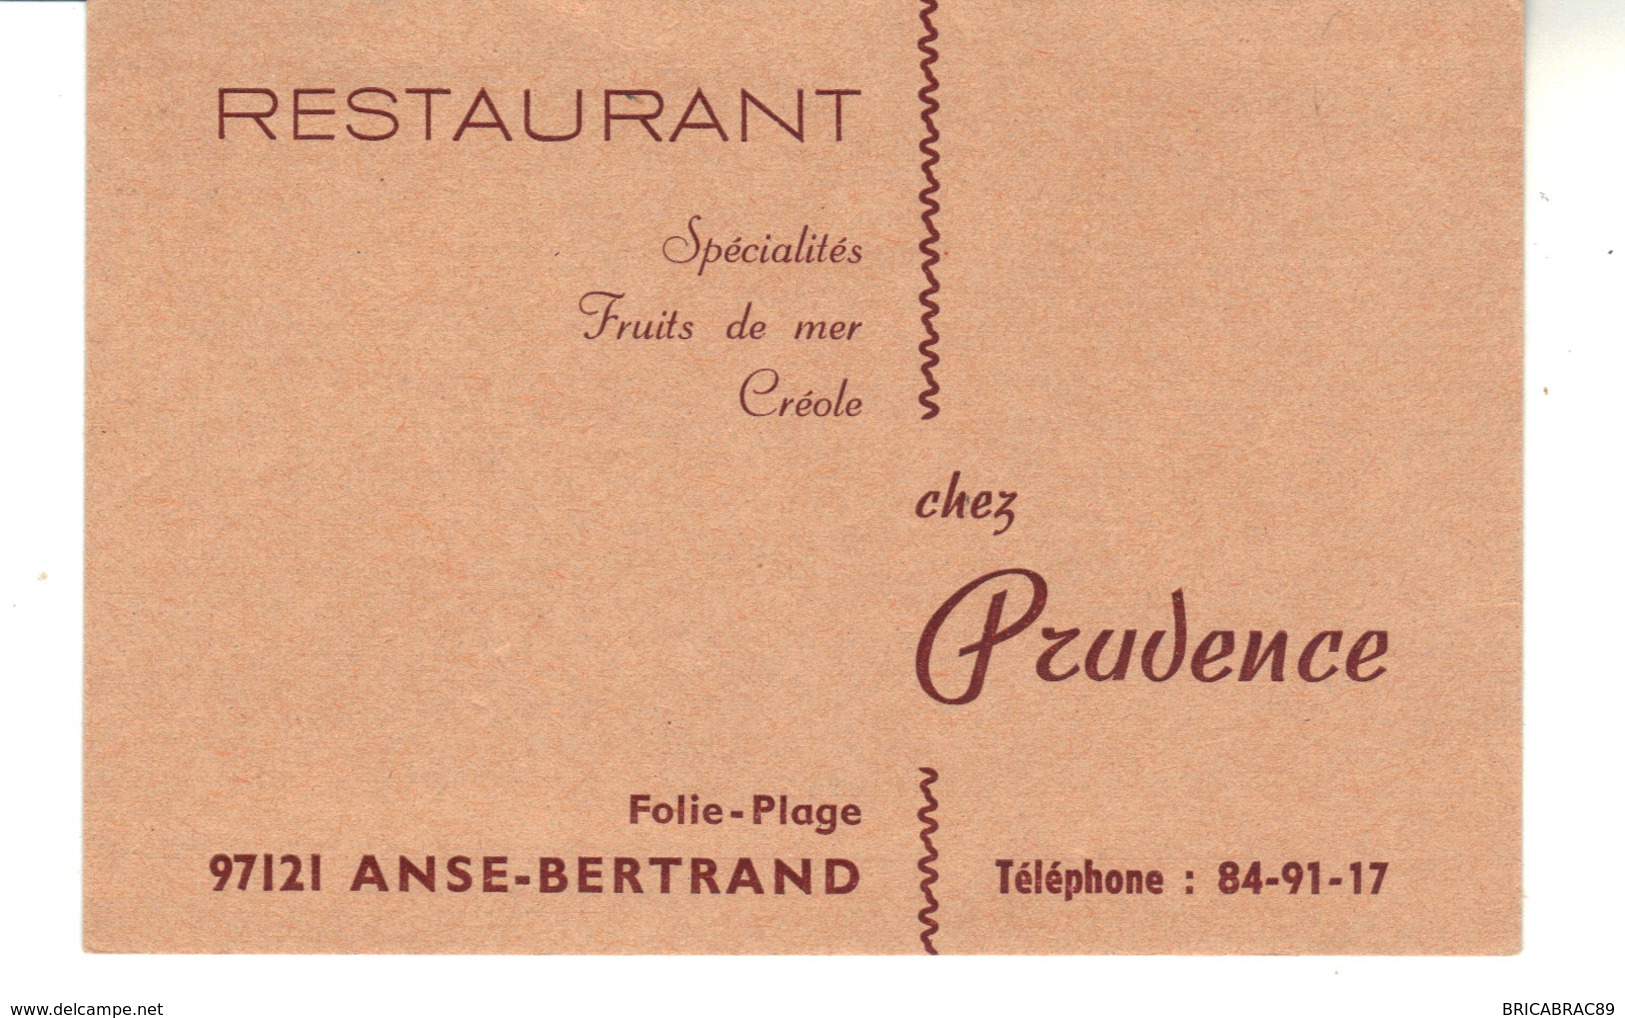 Carte De Visite  Restaurant  97121 Anse-Bertrand  Folie Plage   Chez Prudence - Visiting Cards